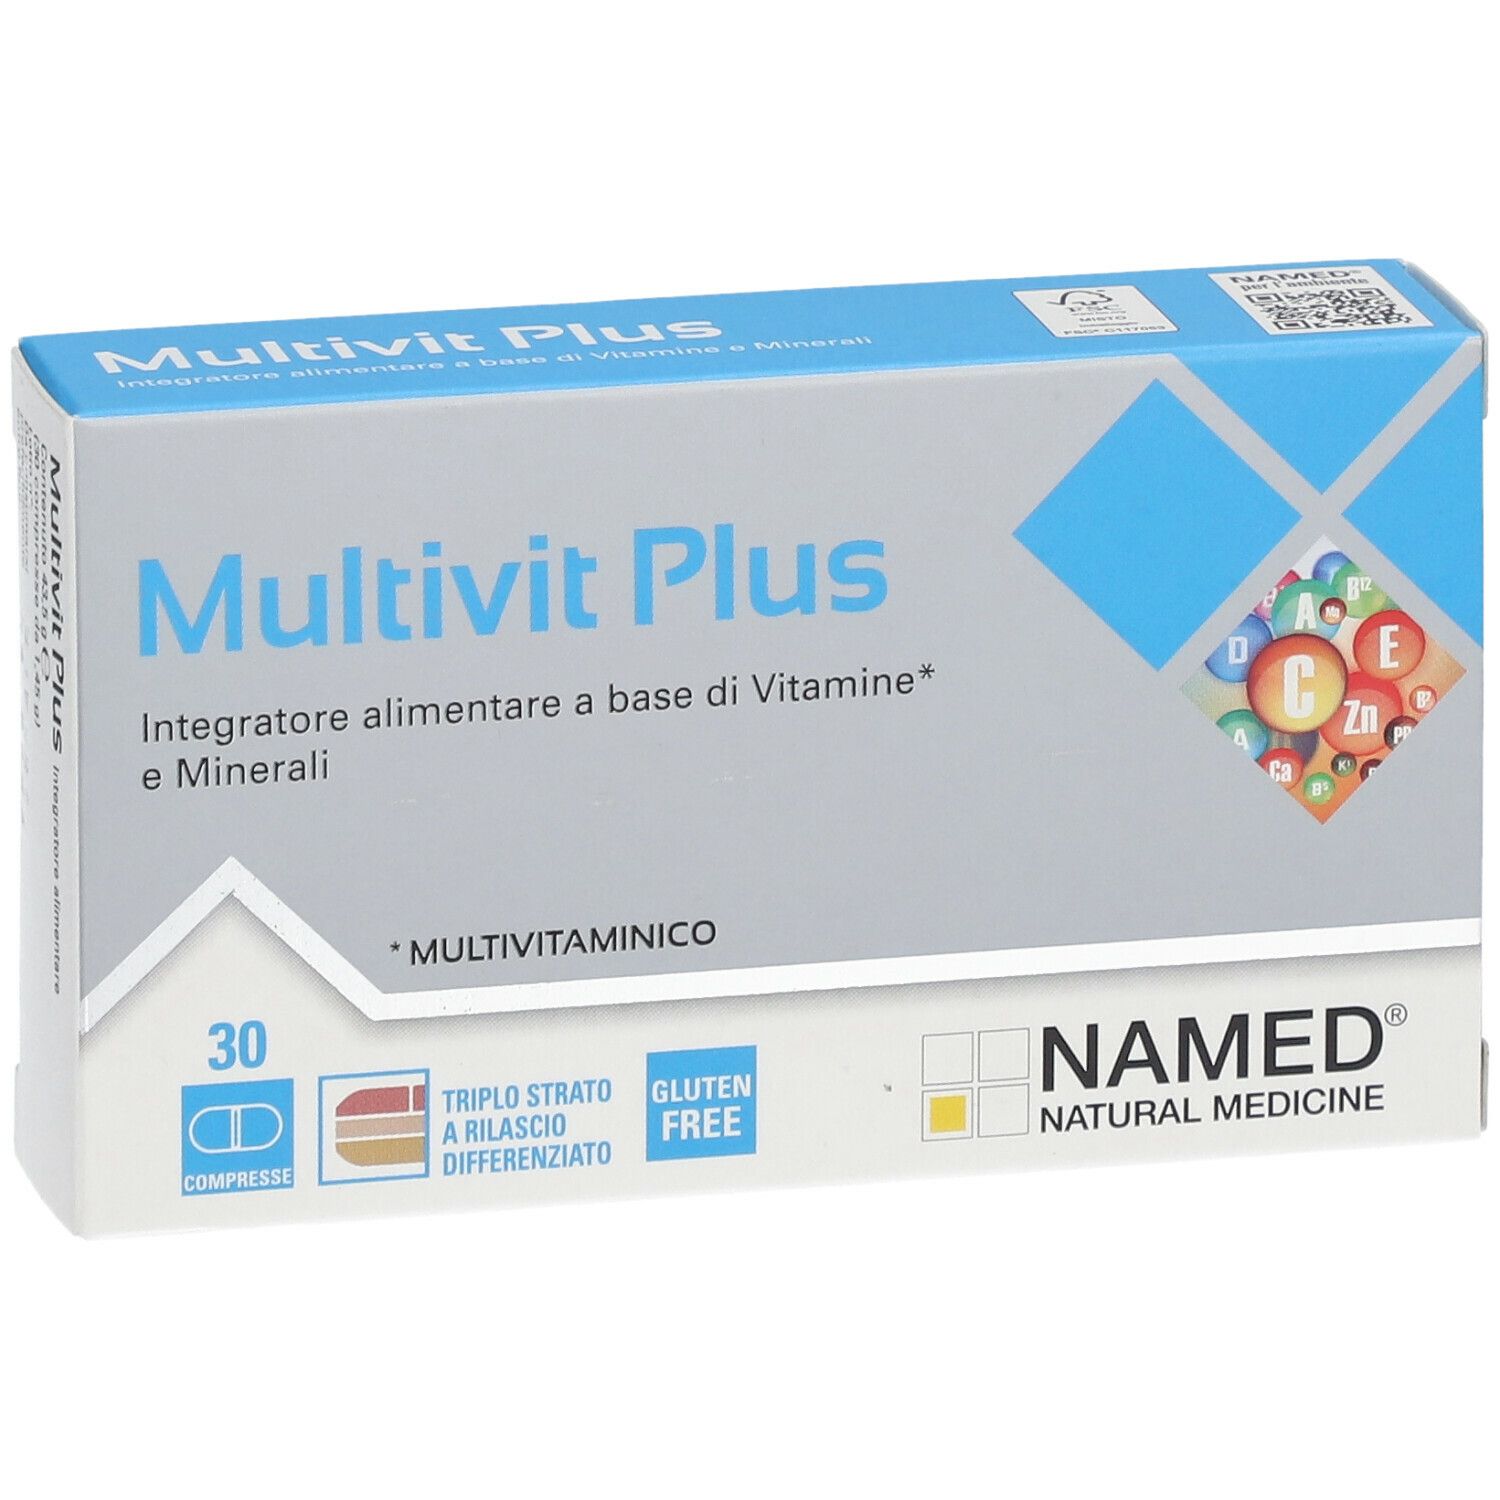 NAMED® Multivit Plus